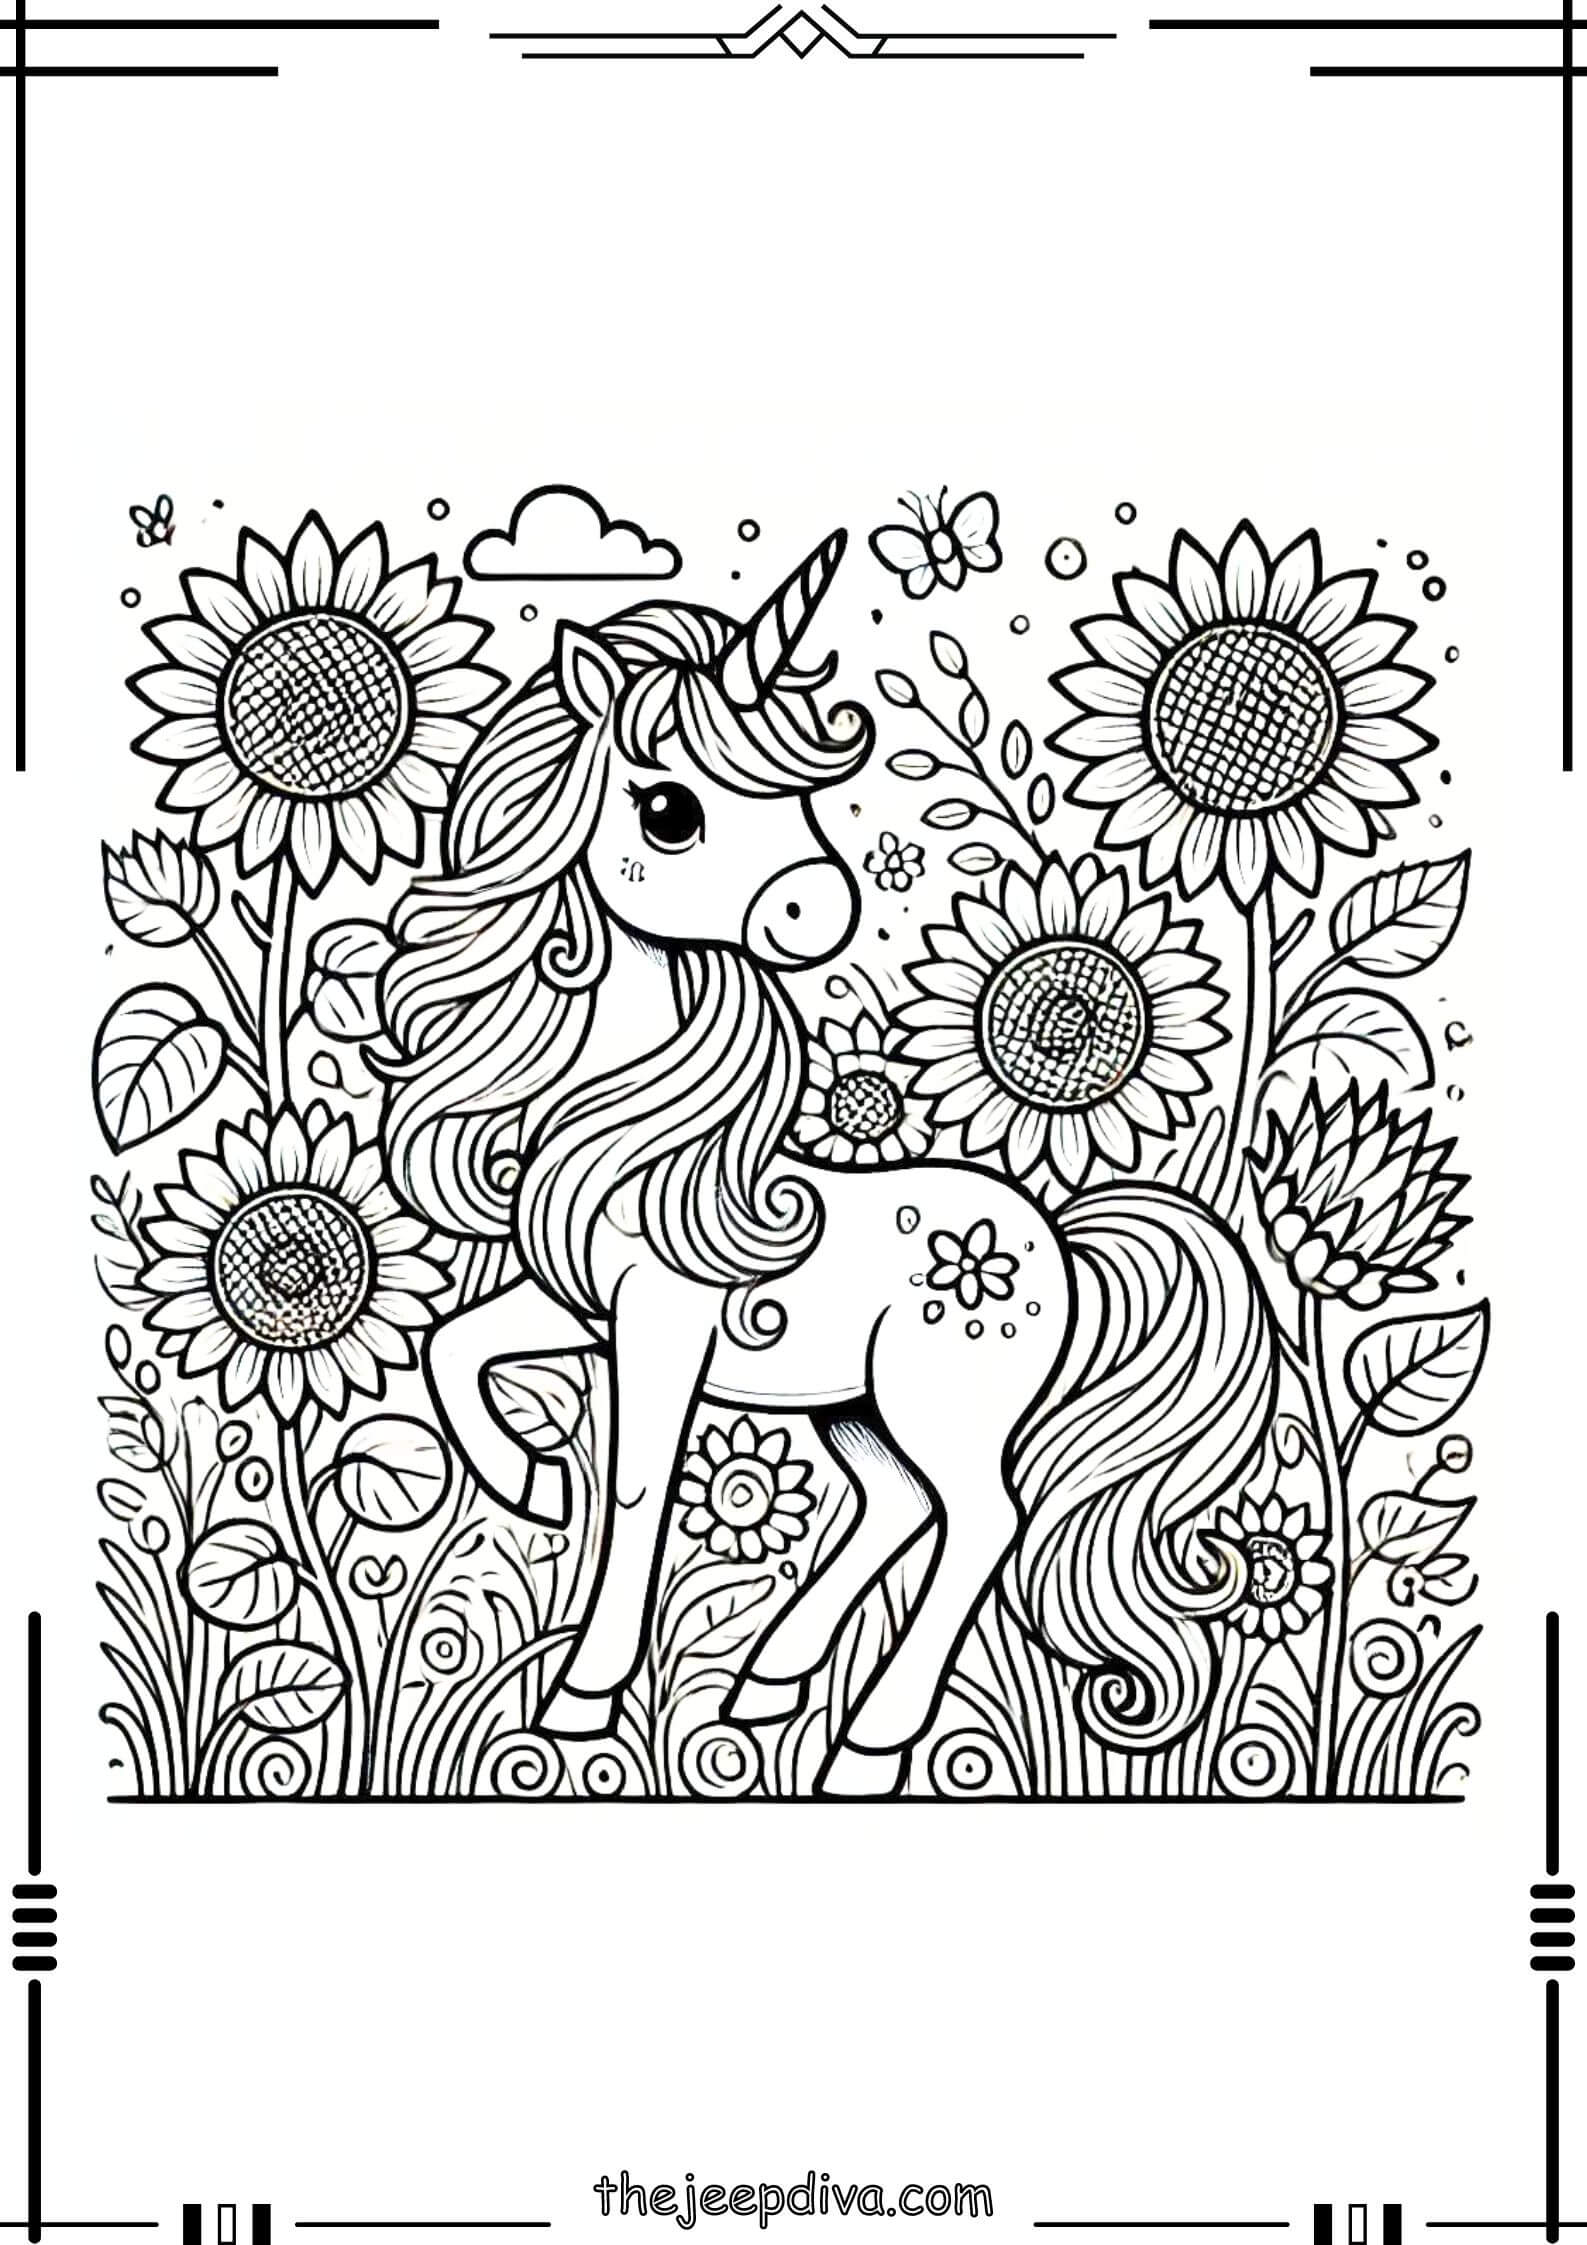 unicorn-coloring-page-hard-23